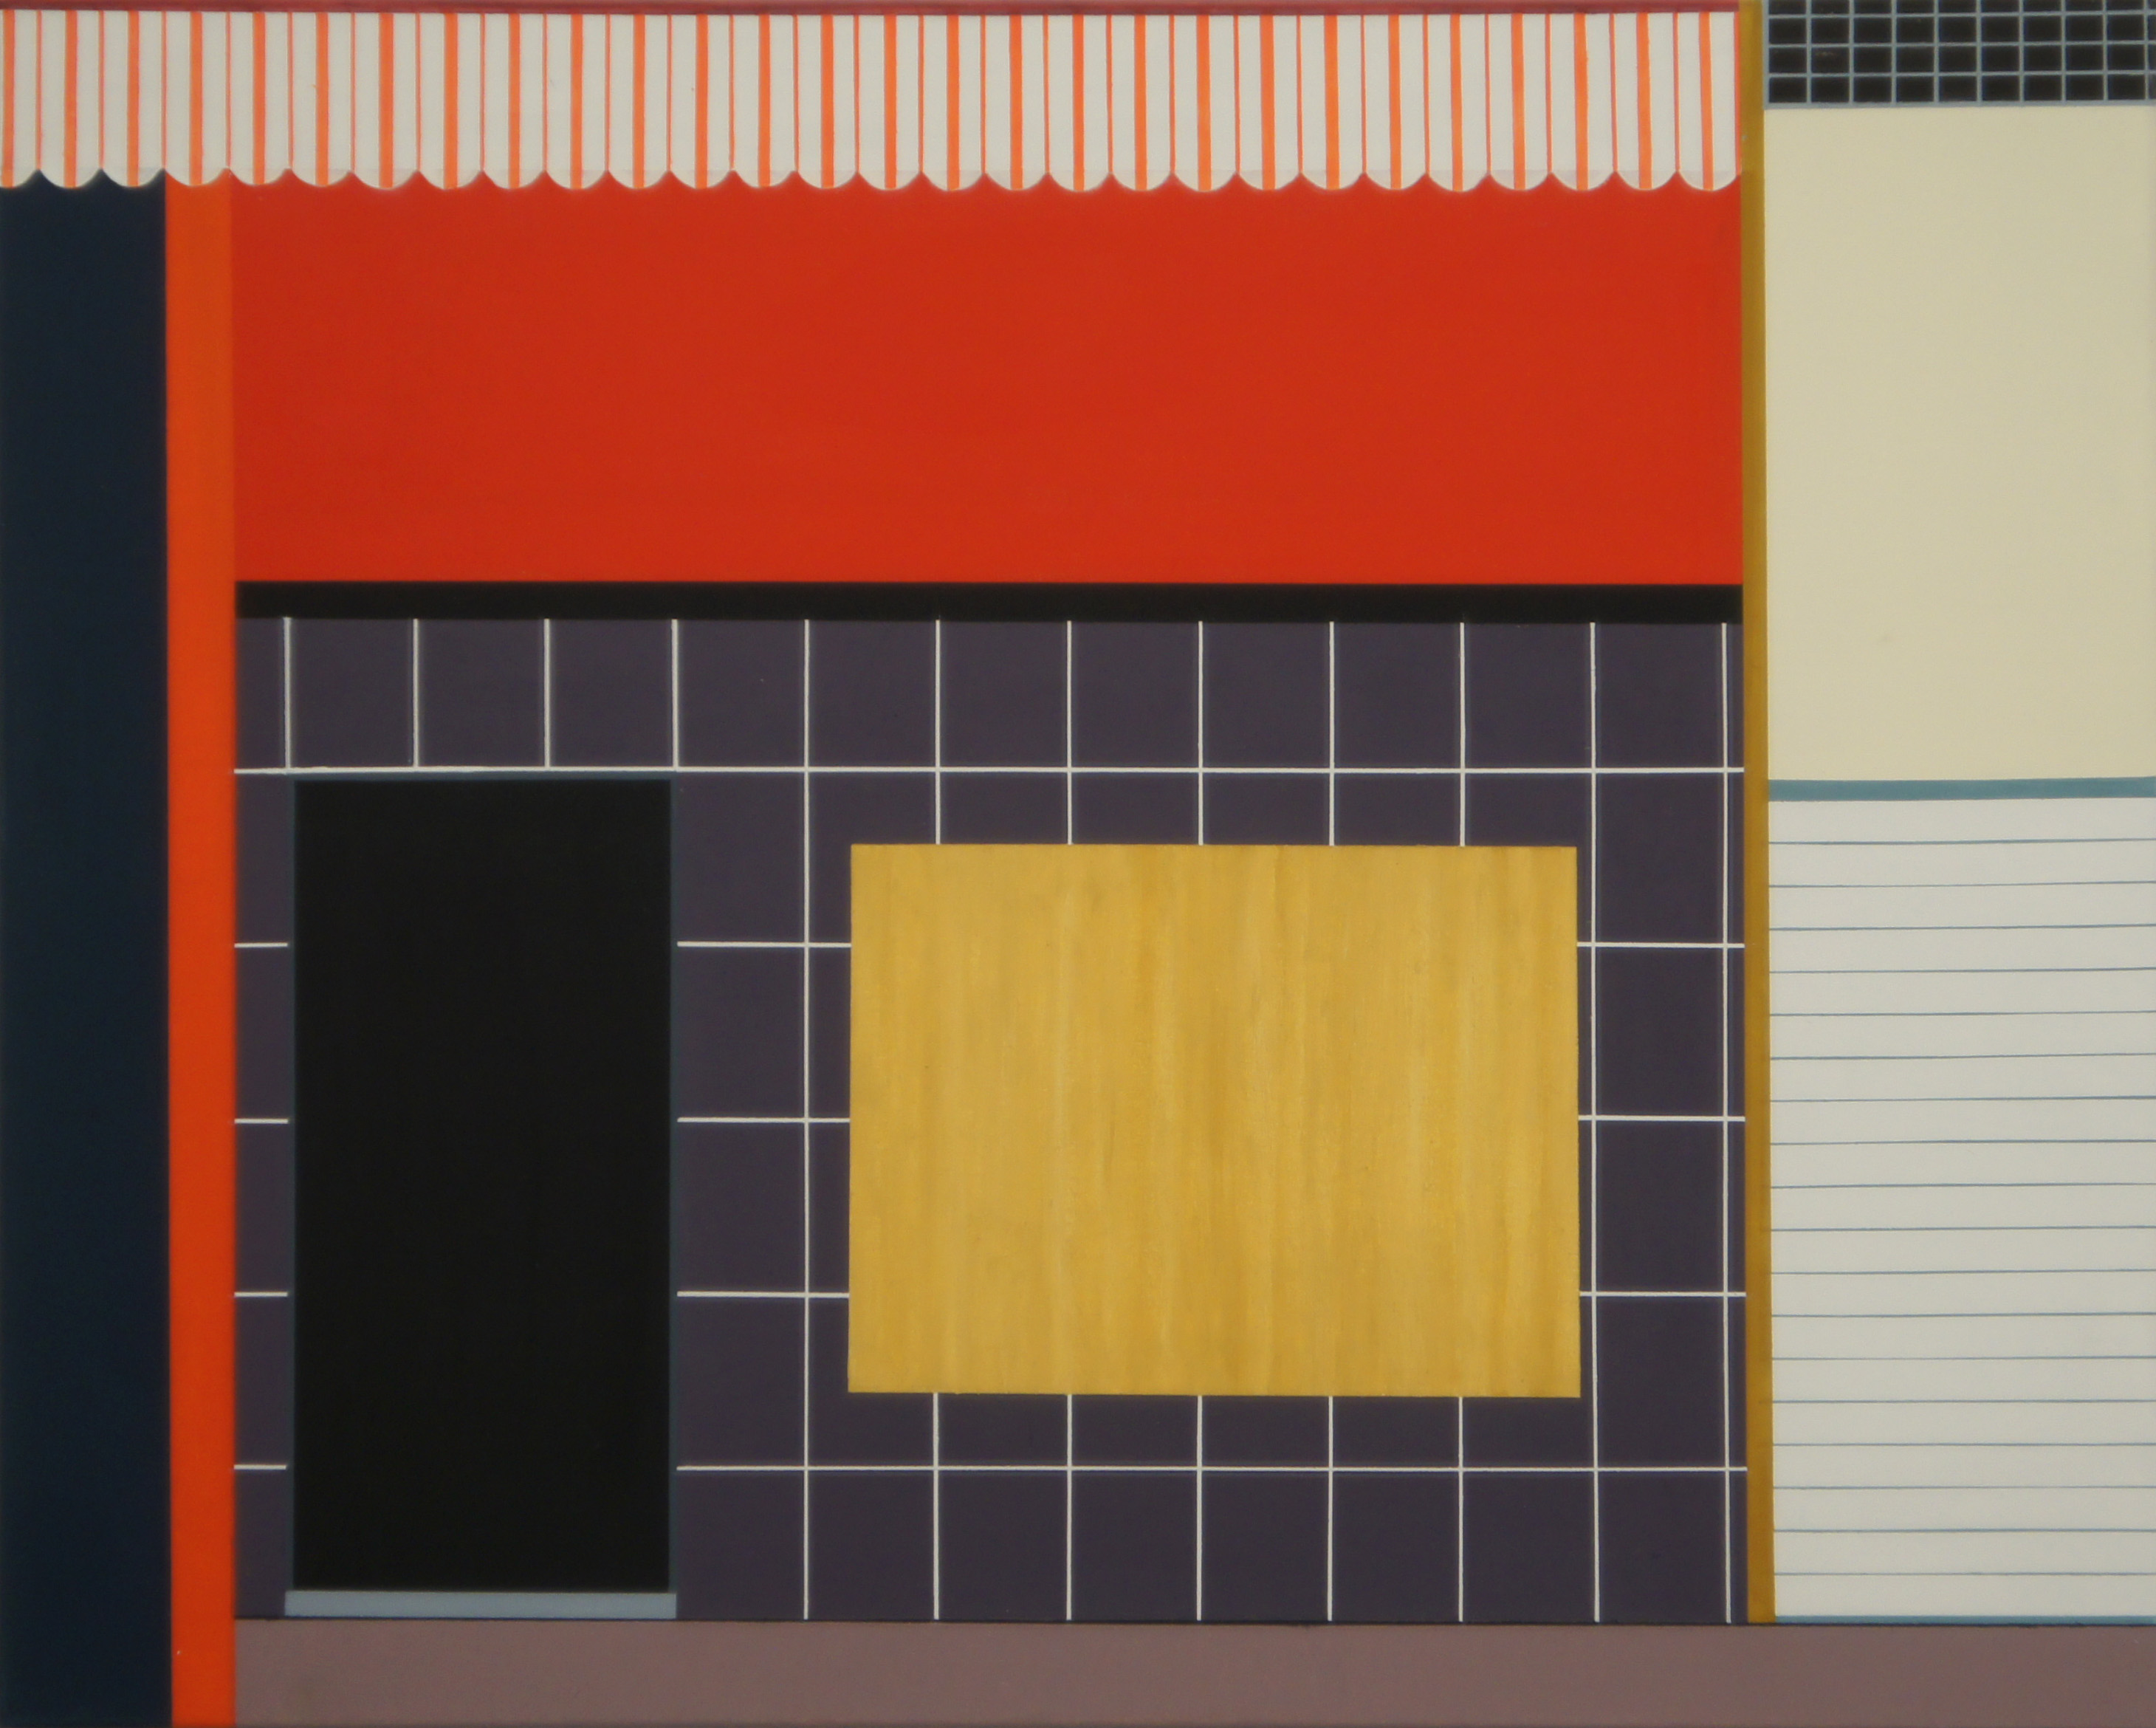 In Papeete, 2010, 80 x 100 cm, Ölfarbe auf Leinwand In Papeete, 2010, 80 x 100 cm, Oil on canvas